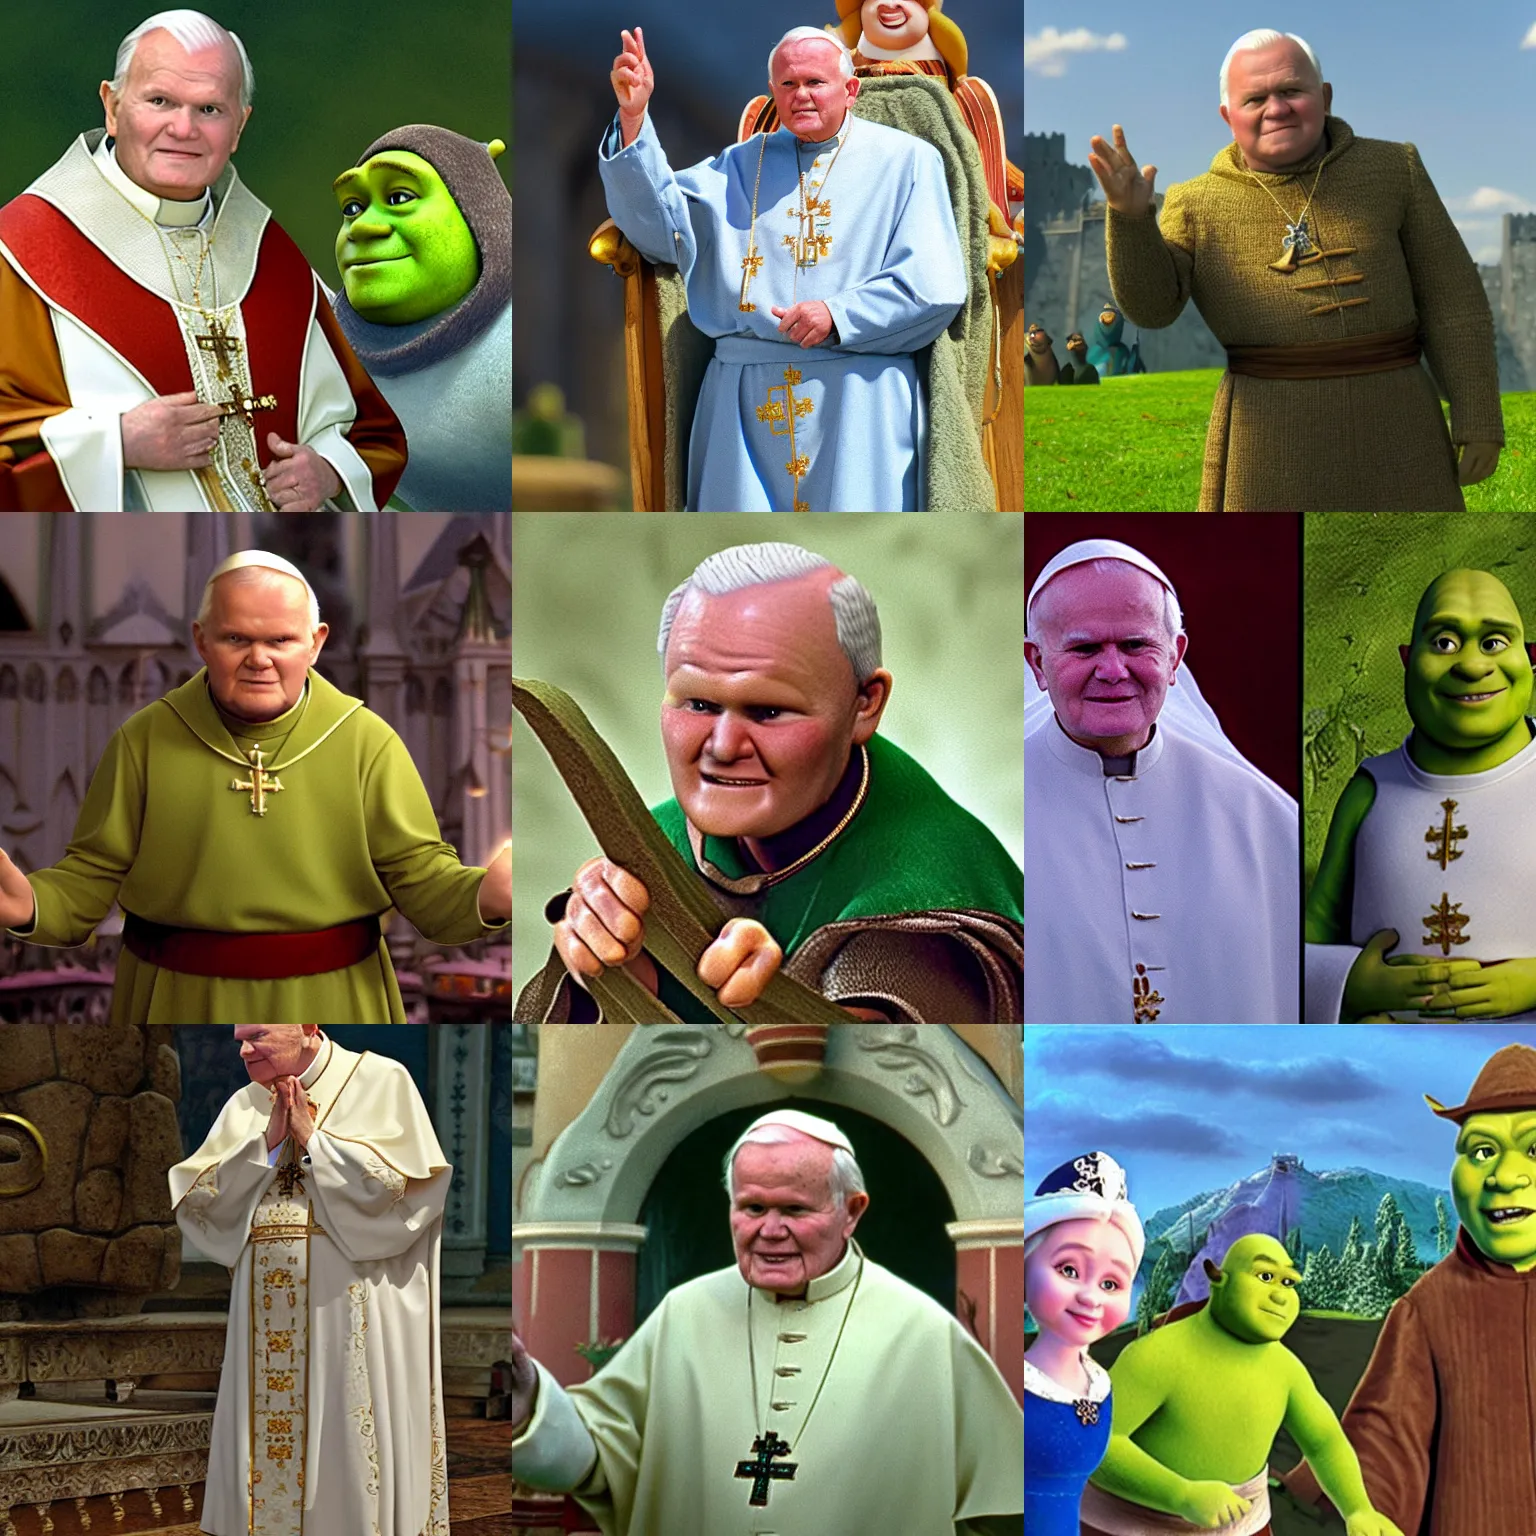 Prompt: John Paul II in Shrek film